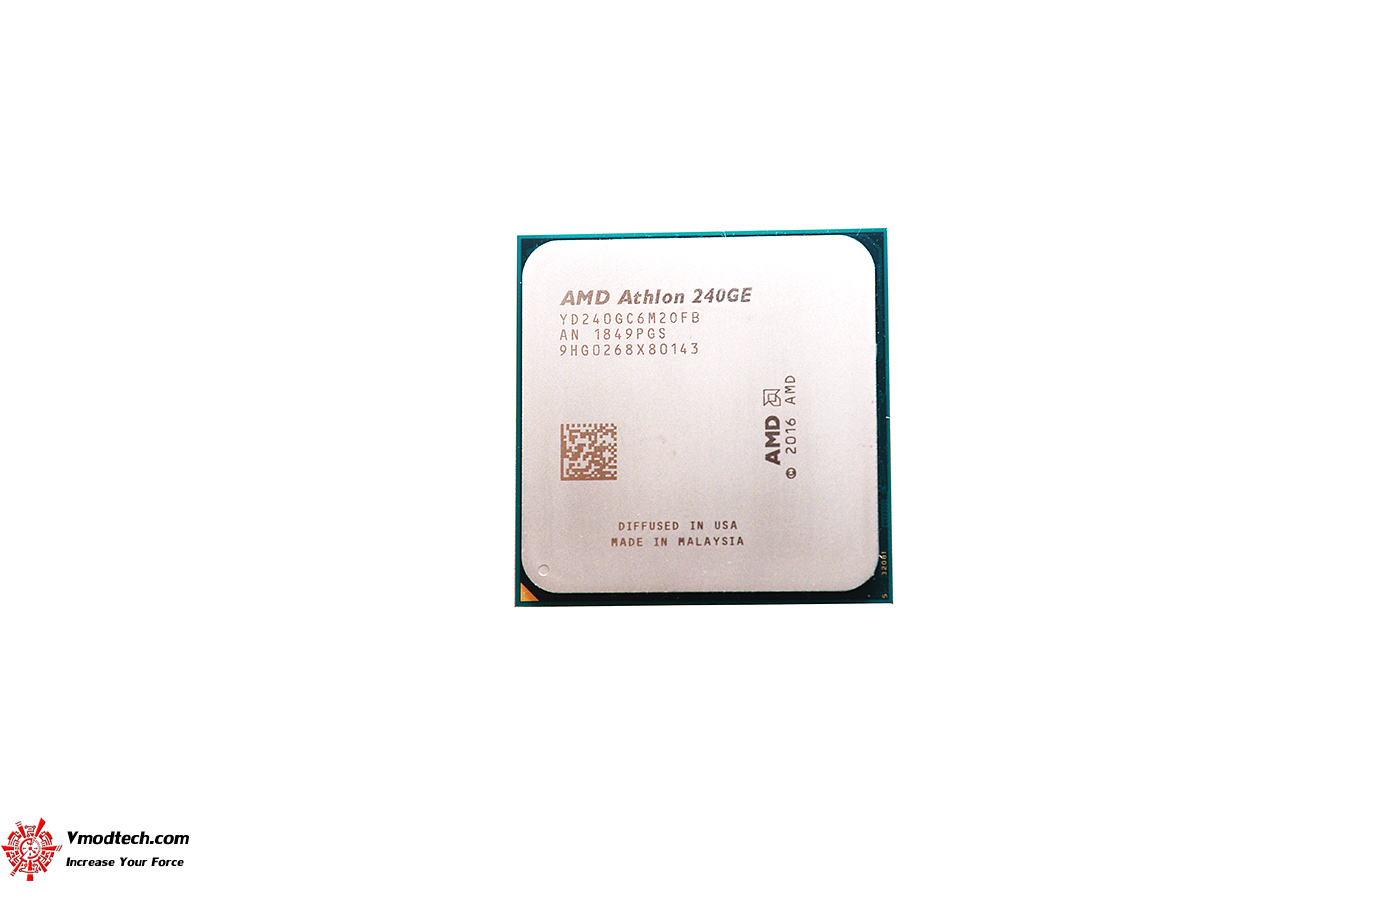 dsc 8149 AMD Athlon 240GE Processor with Radeon Vega 3 Graphics Review 